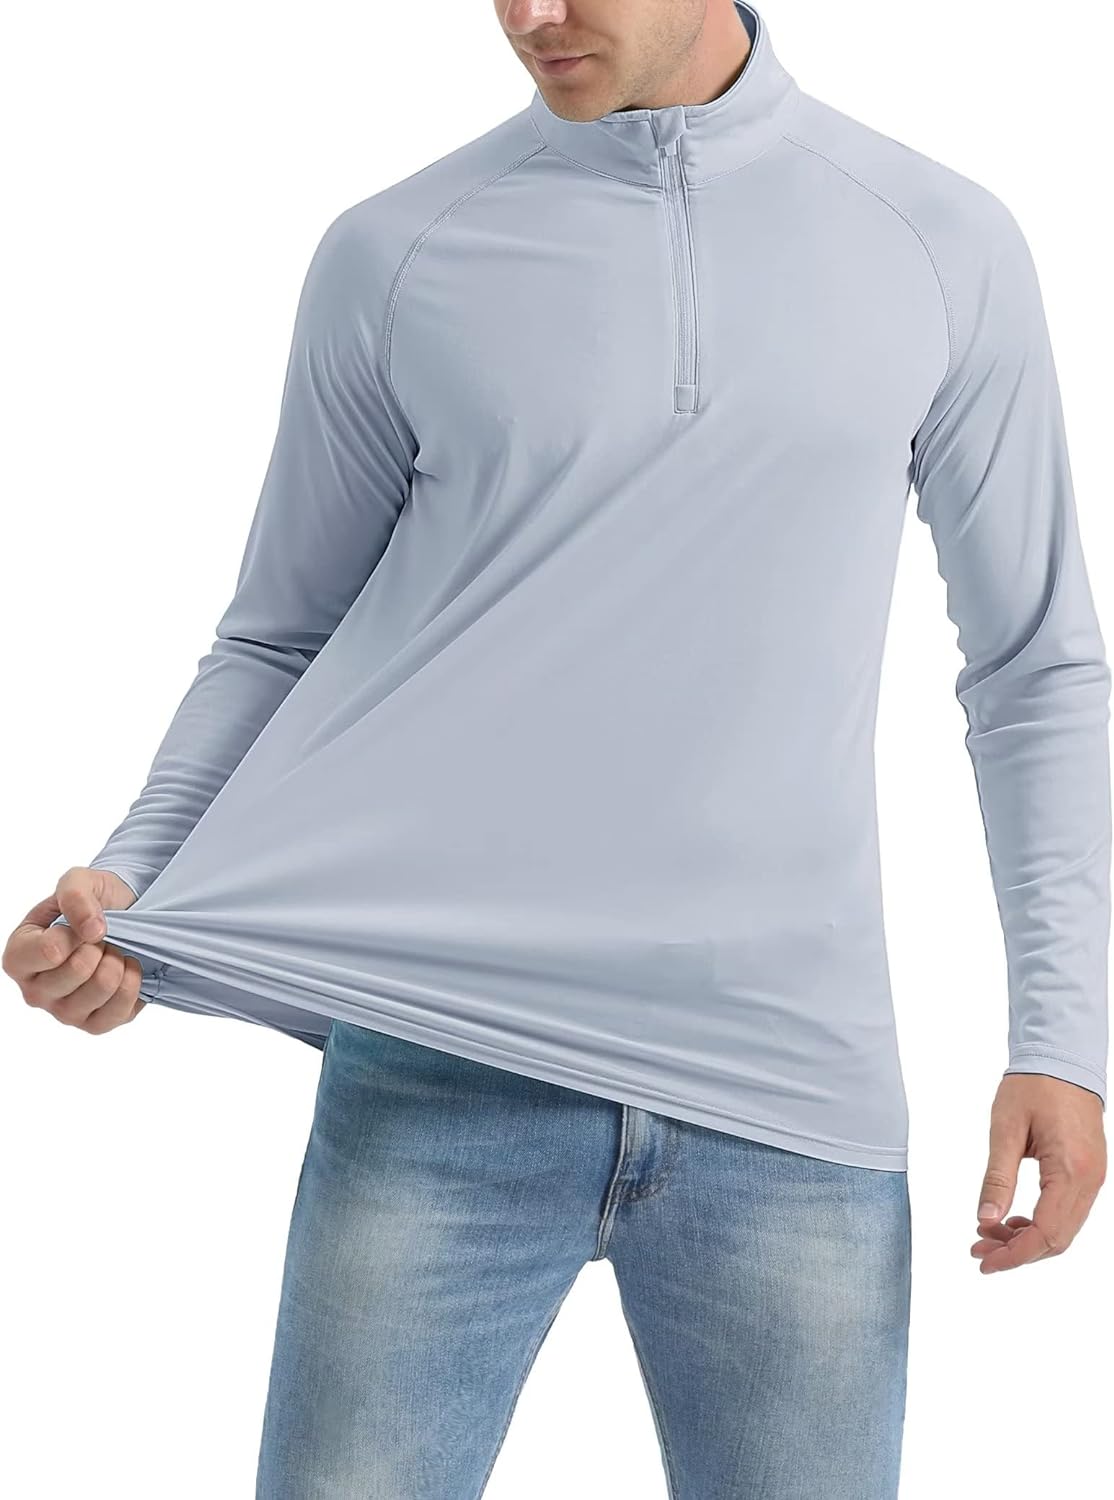 MAGCOMSEN Mens Long Sleeve Sun Shirts UPF 50+ Tees 1/4 Zip Up Fishing Running Rash Guard T-Shirts Outdoor Shirt